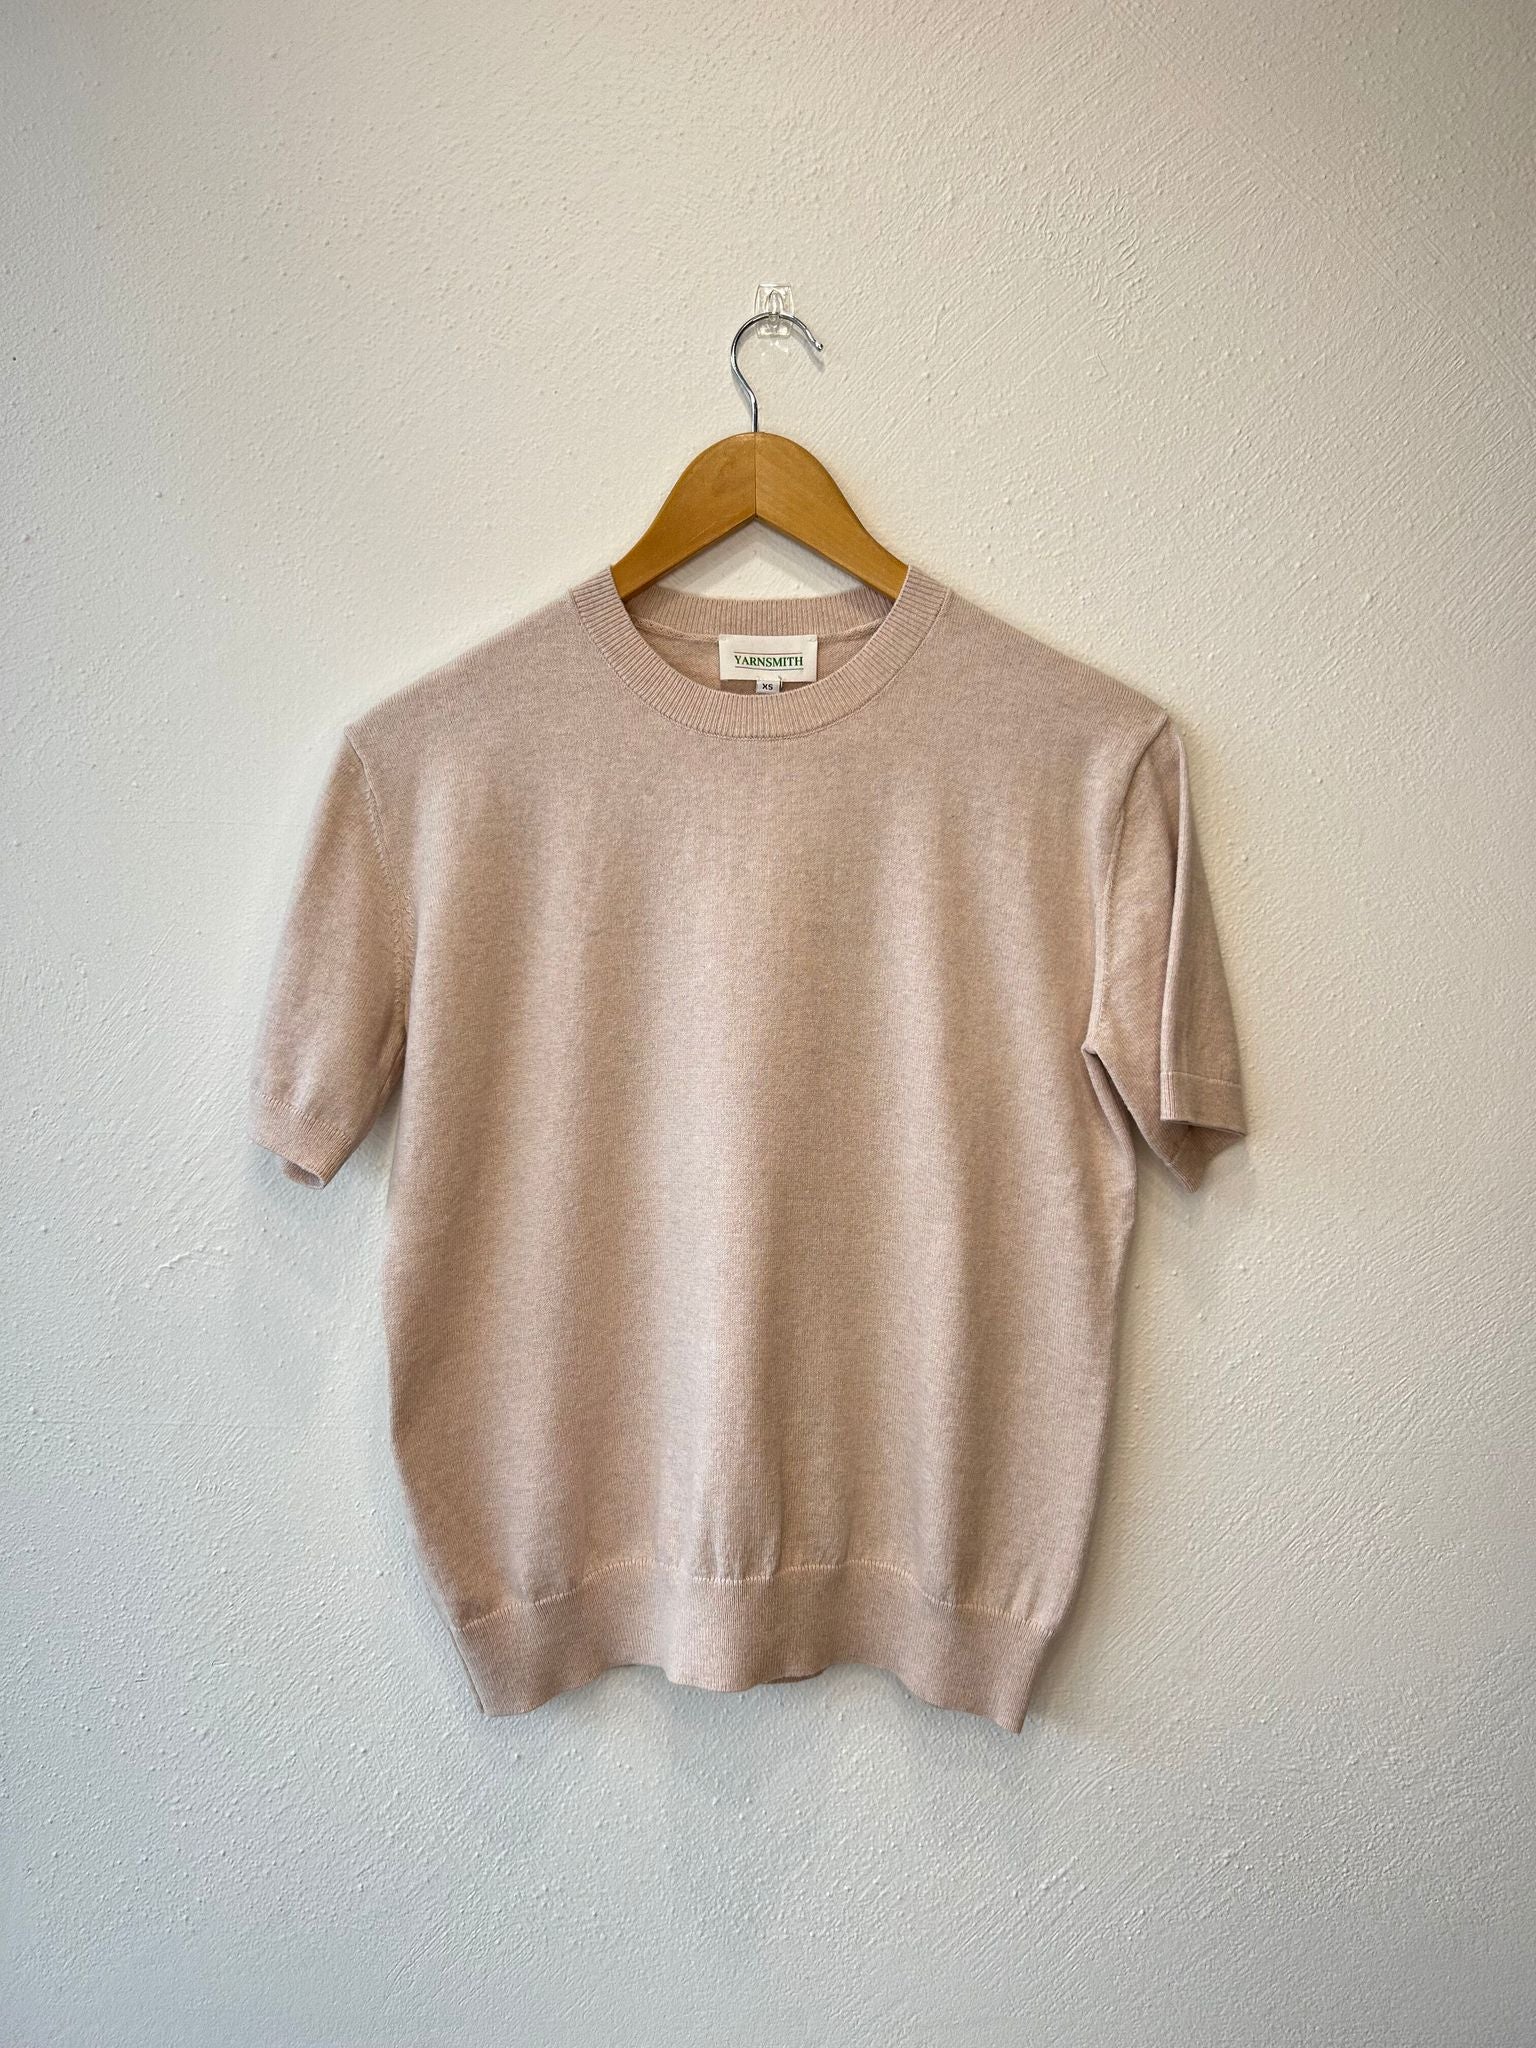 Beryl Cotton/Cashmere T Shirt Yarnsmith BRK3A Oatmeal